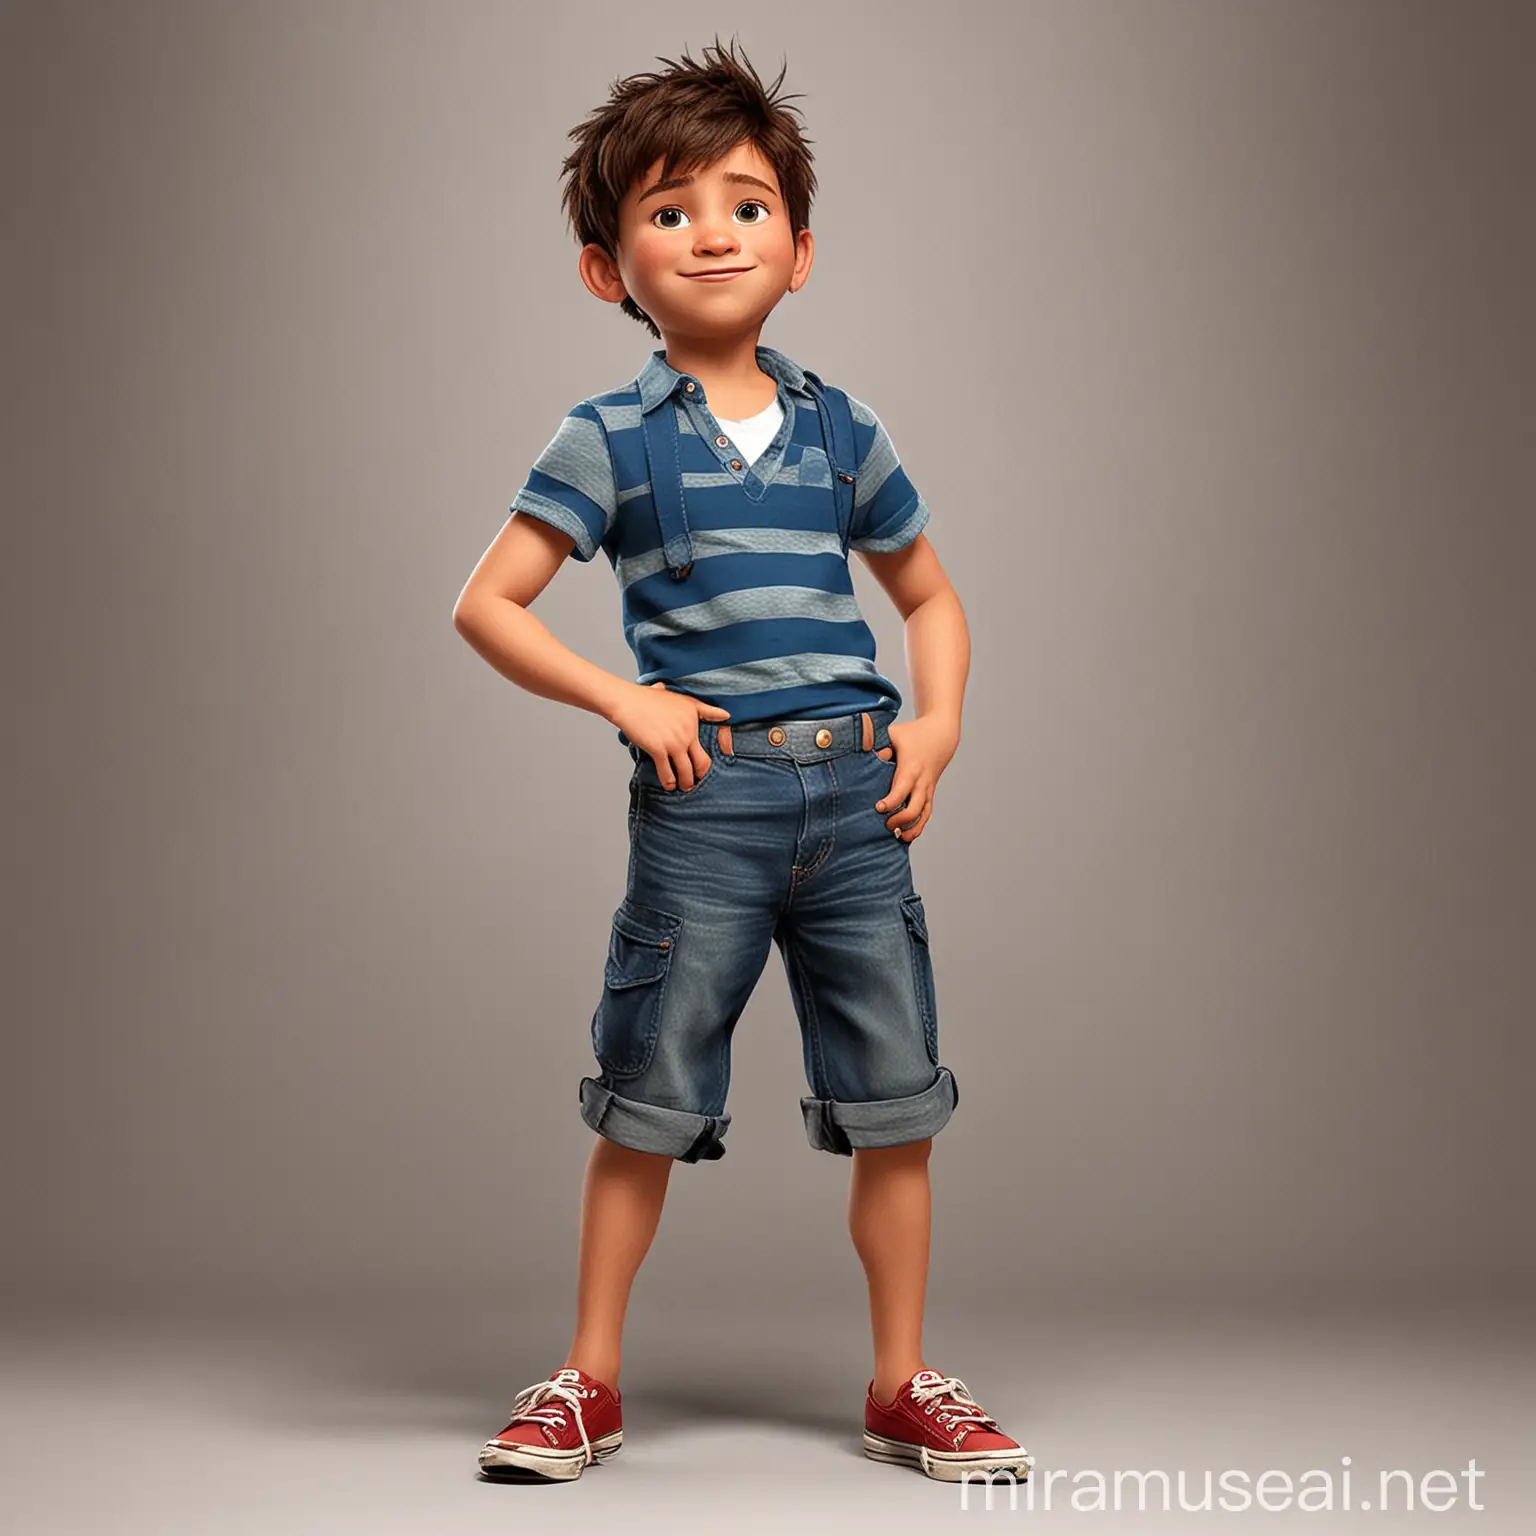 Disney Pixar Inspired 11YearOld in IllFitting Clothes